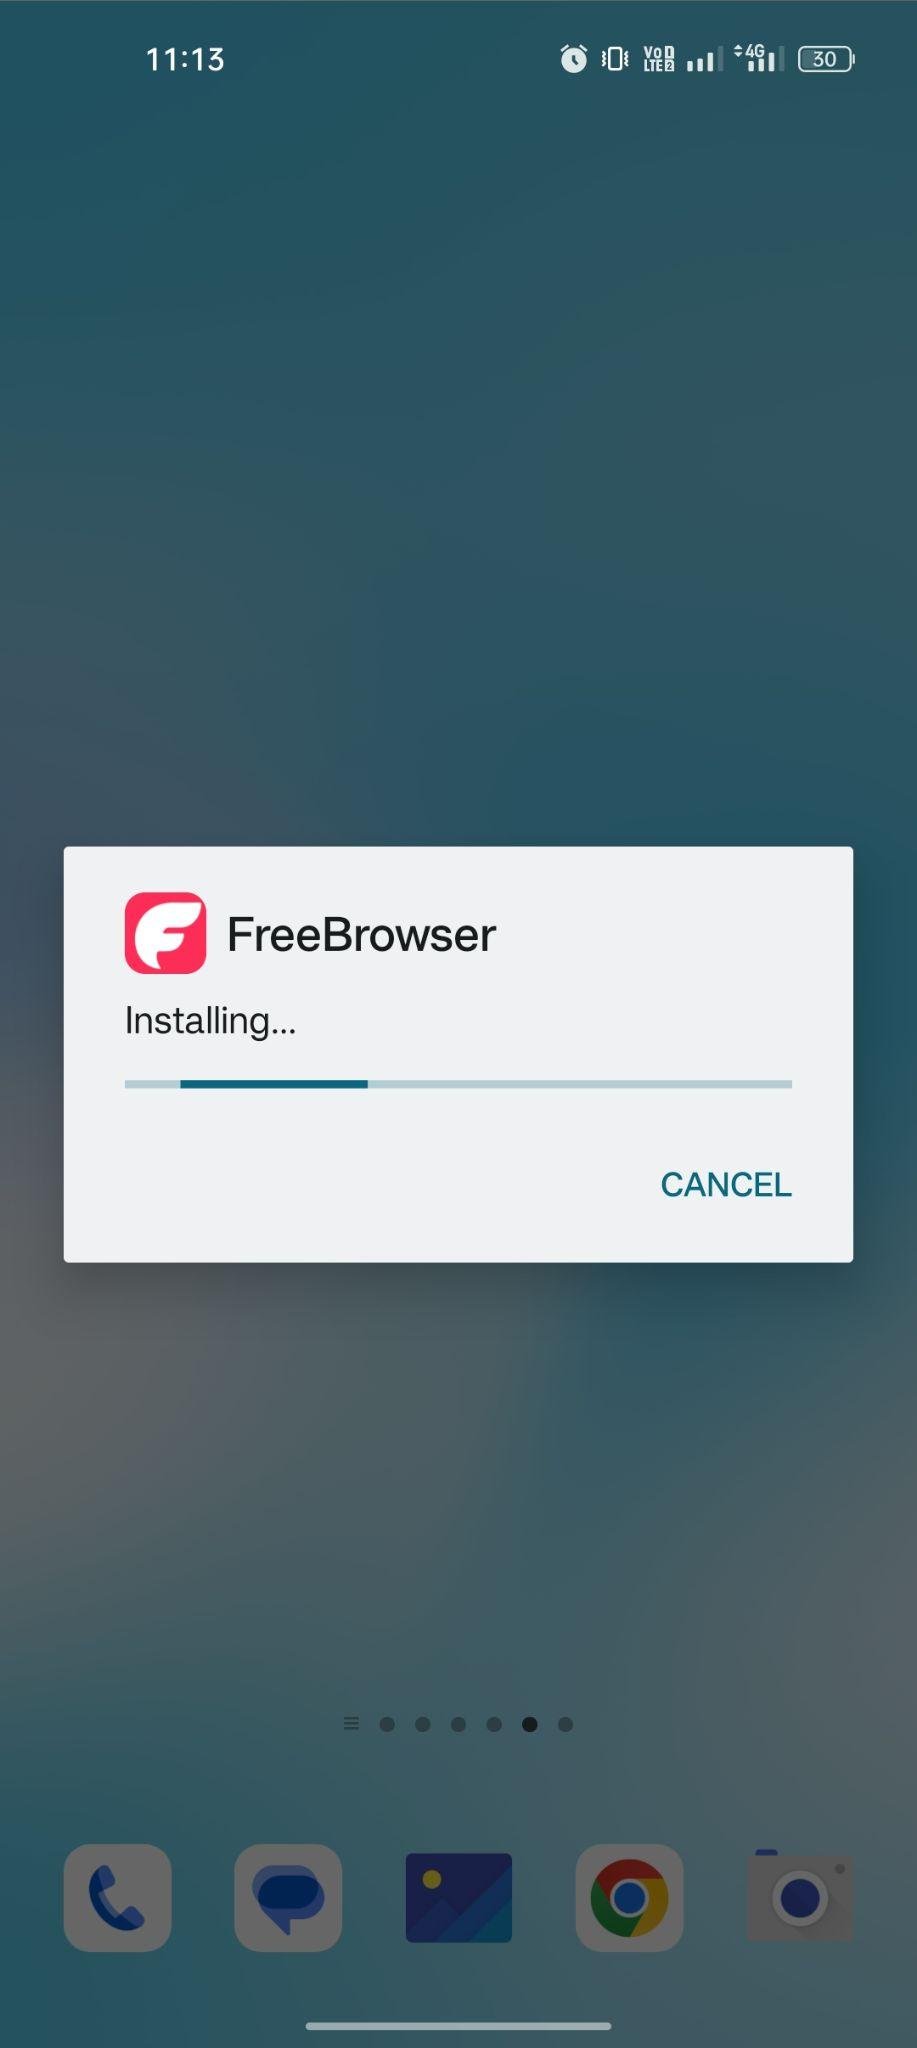 FreeBrowser apk installing